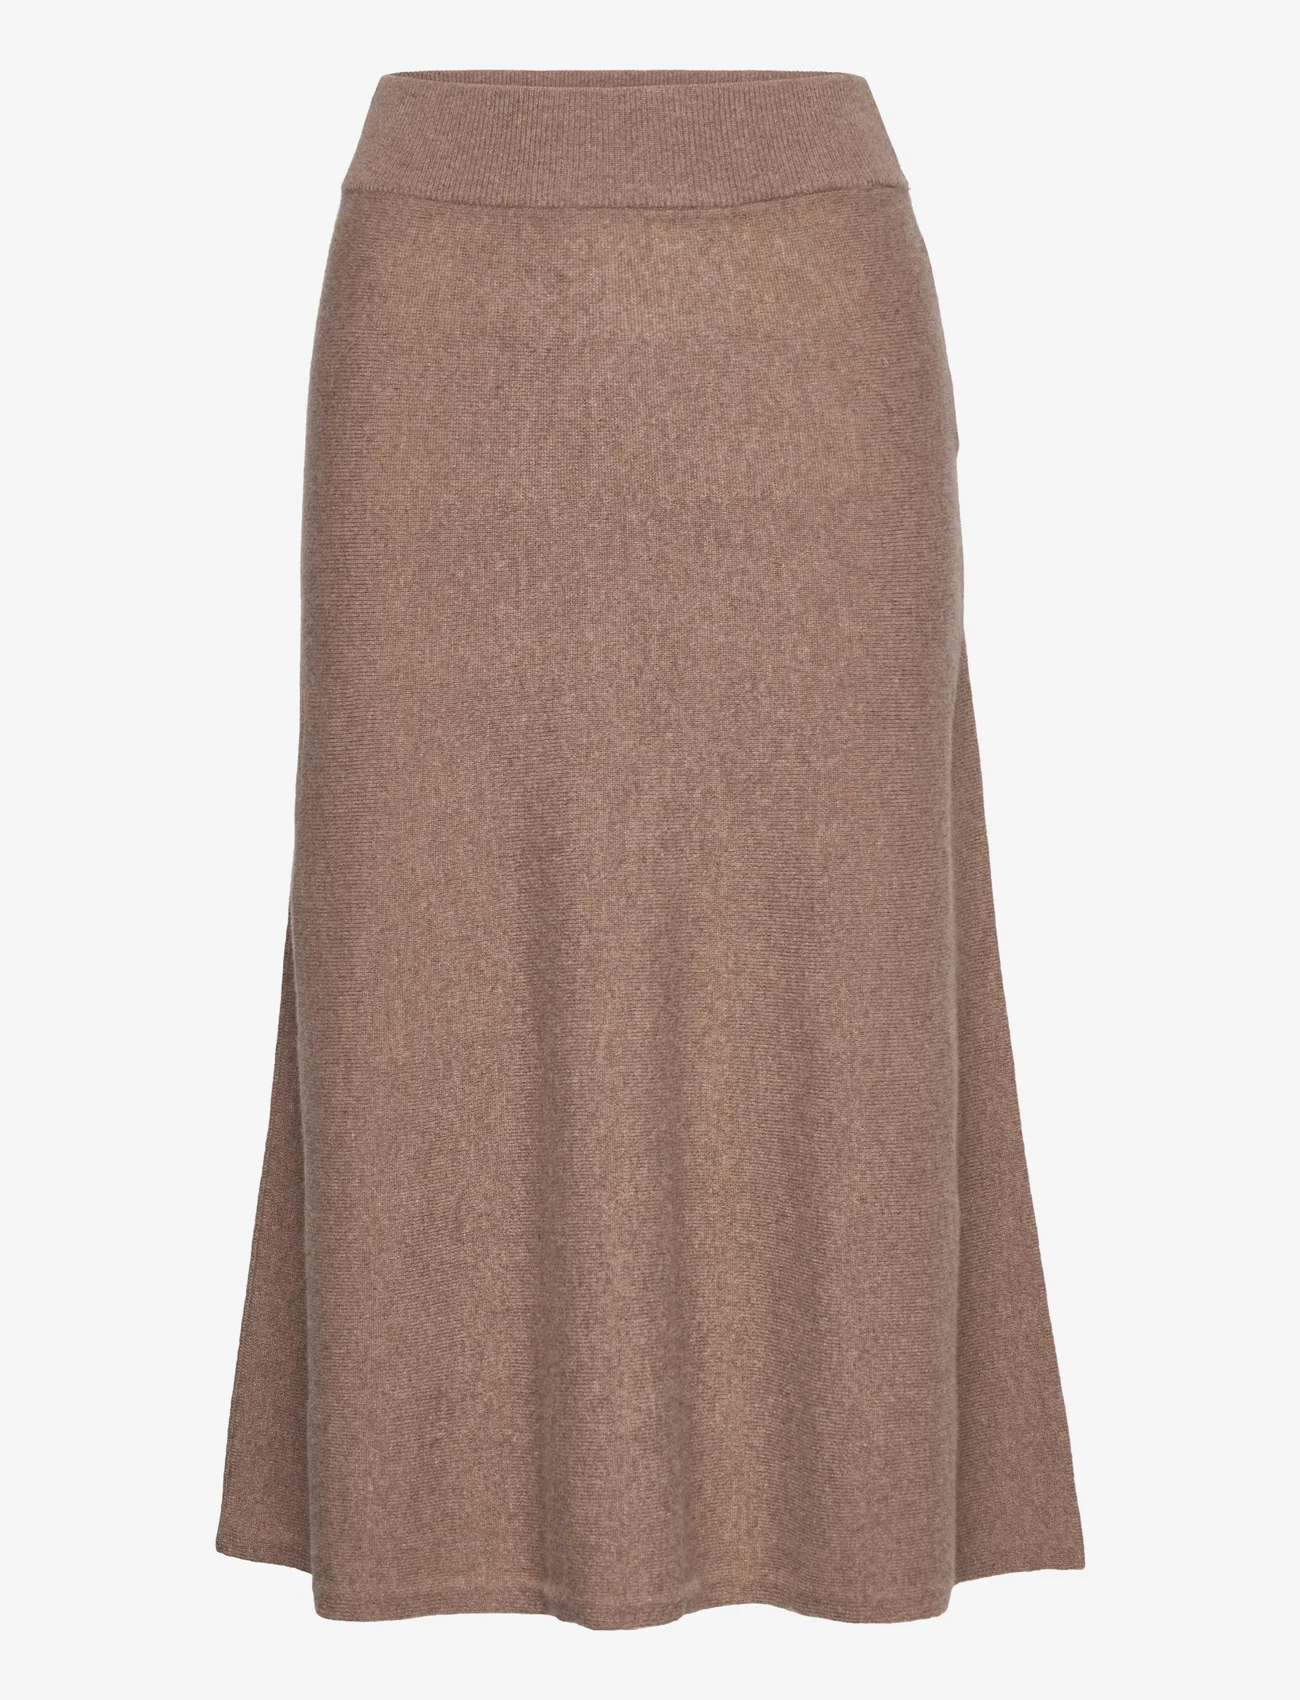 GANT - D1. SUPERFINE LAMBSWOOL SKIRT - knitted skirts - mole brown - 0